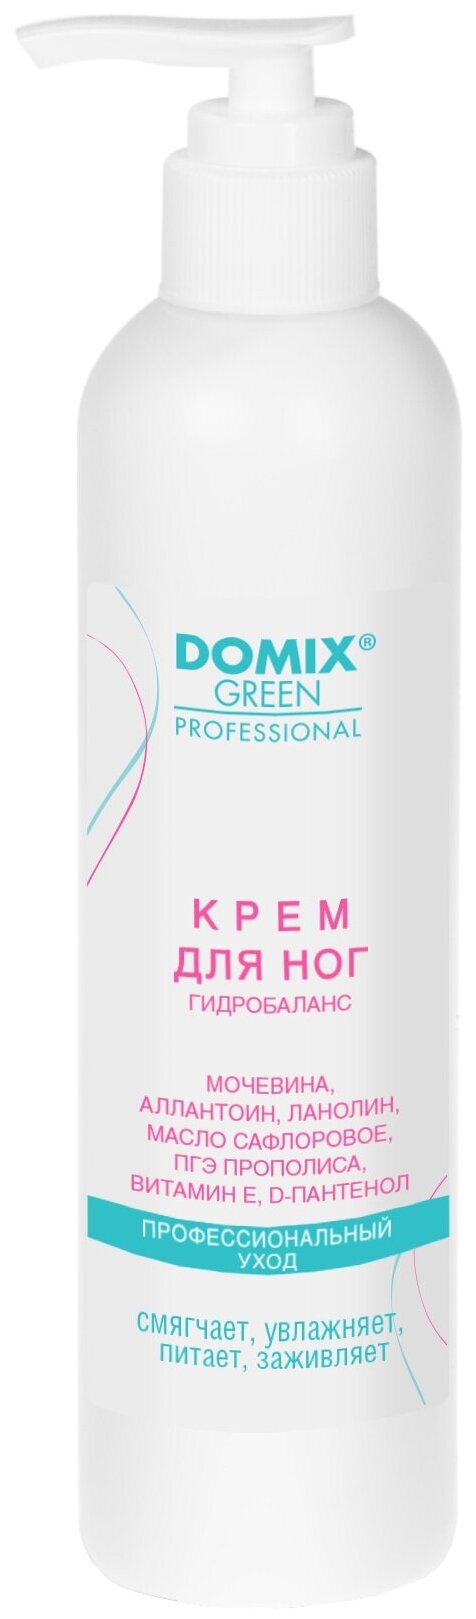 Domix Green Professional Крем для ног Гидробаланс, 250 мл